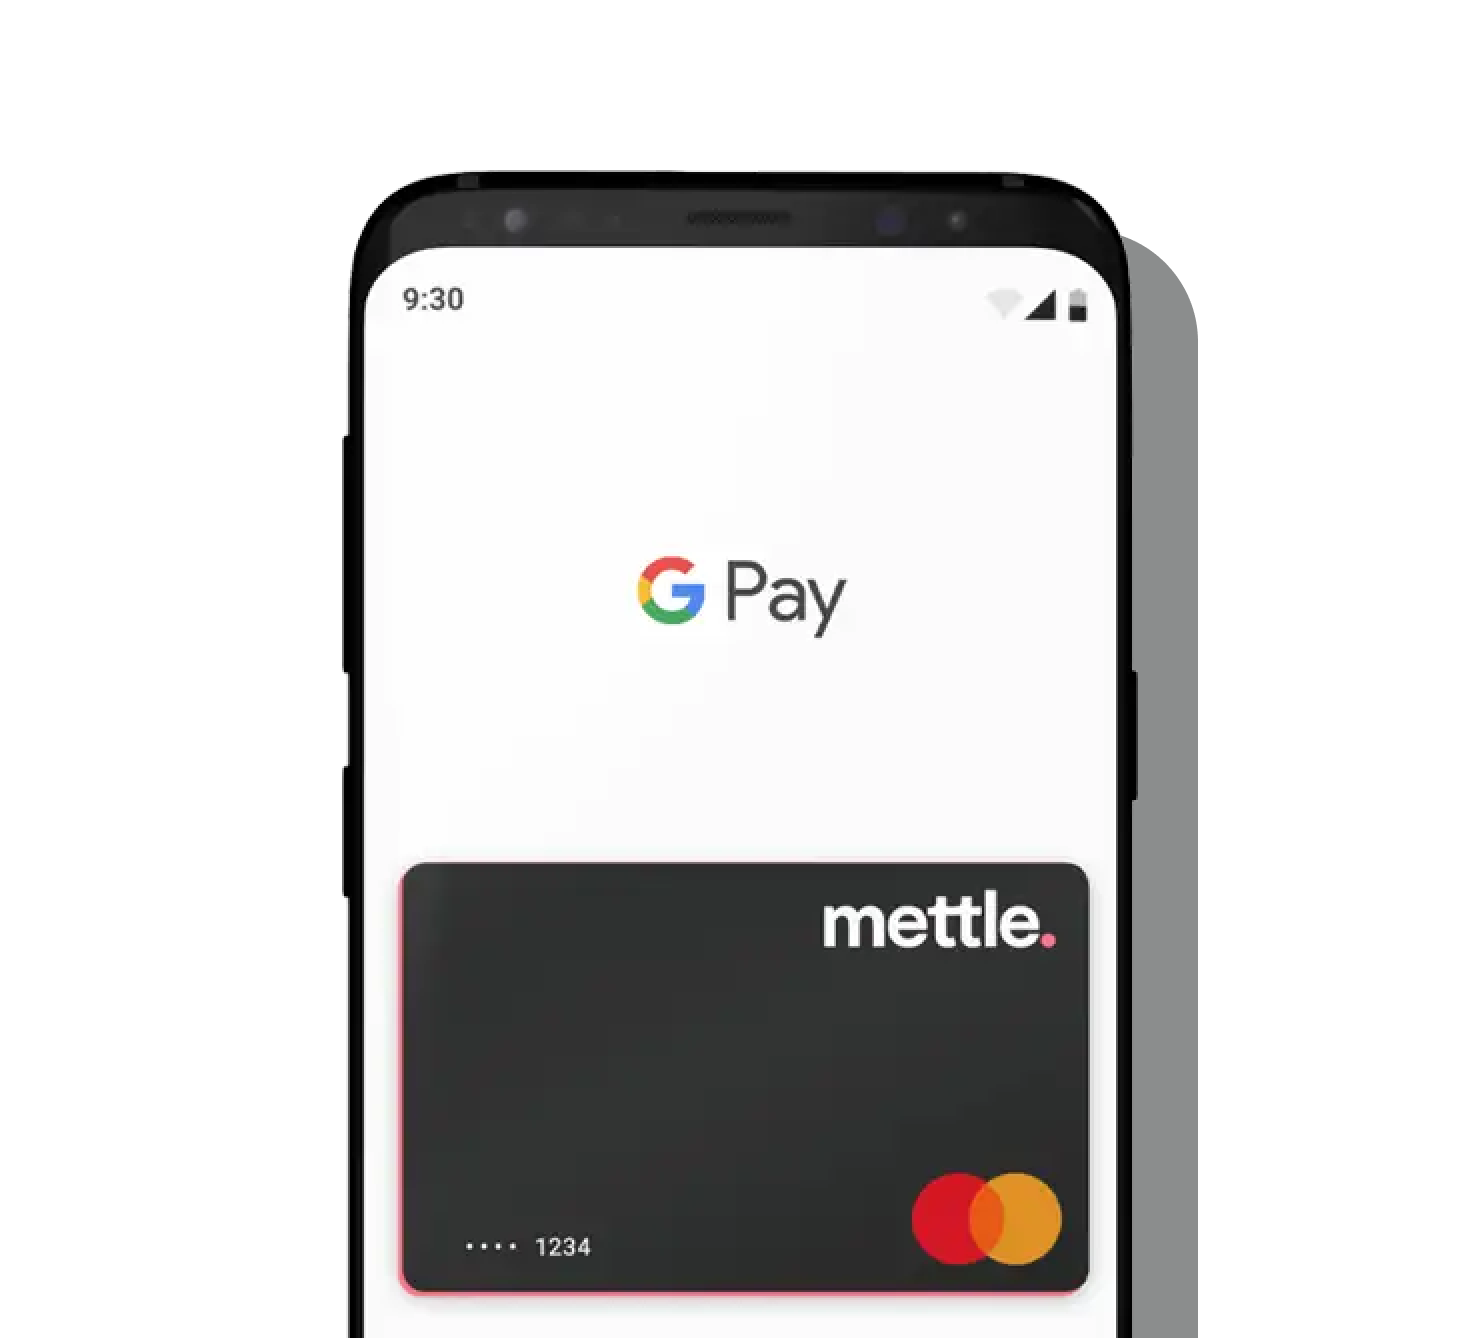 Google Pay Phone